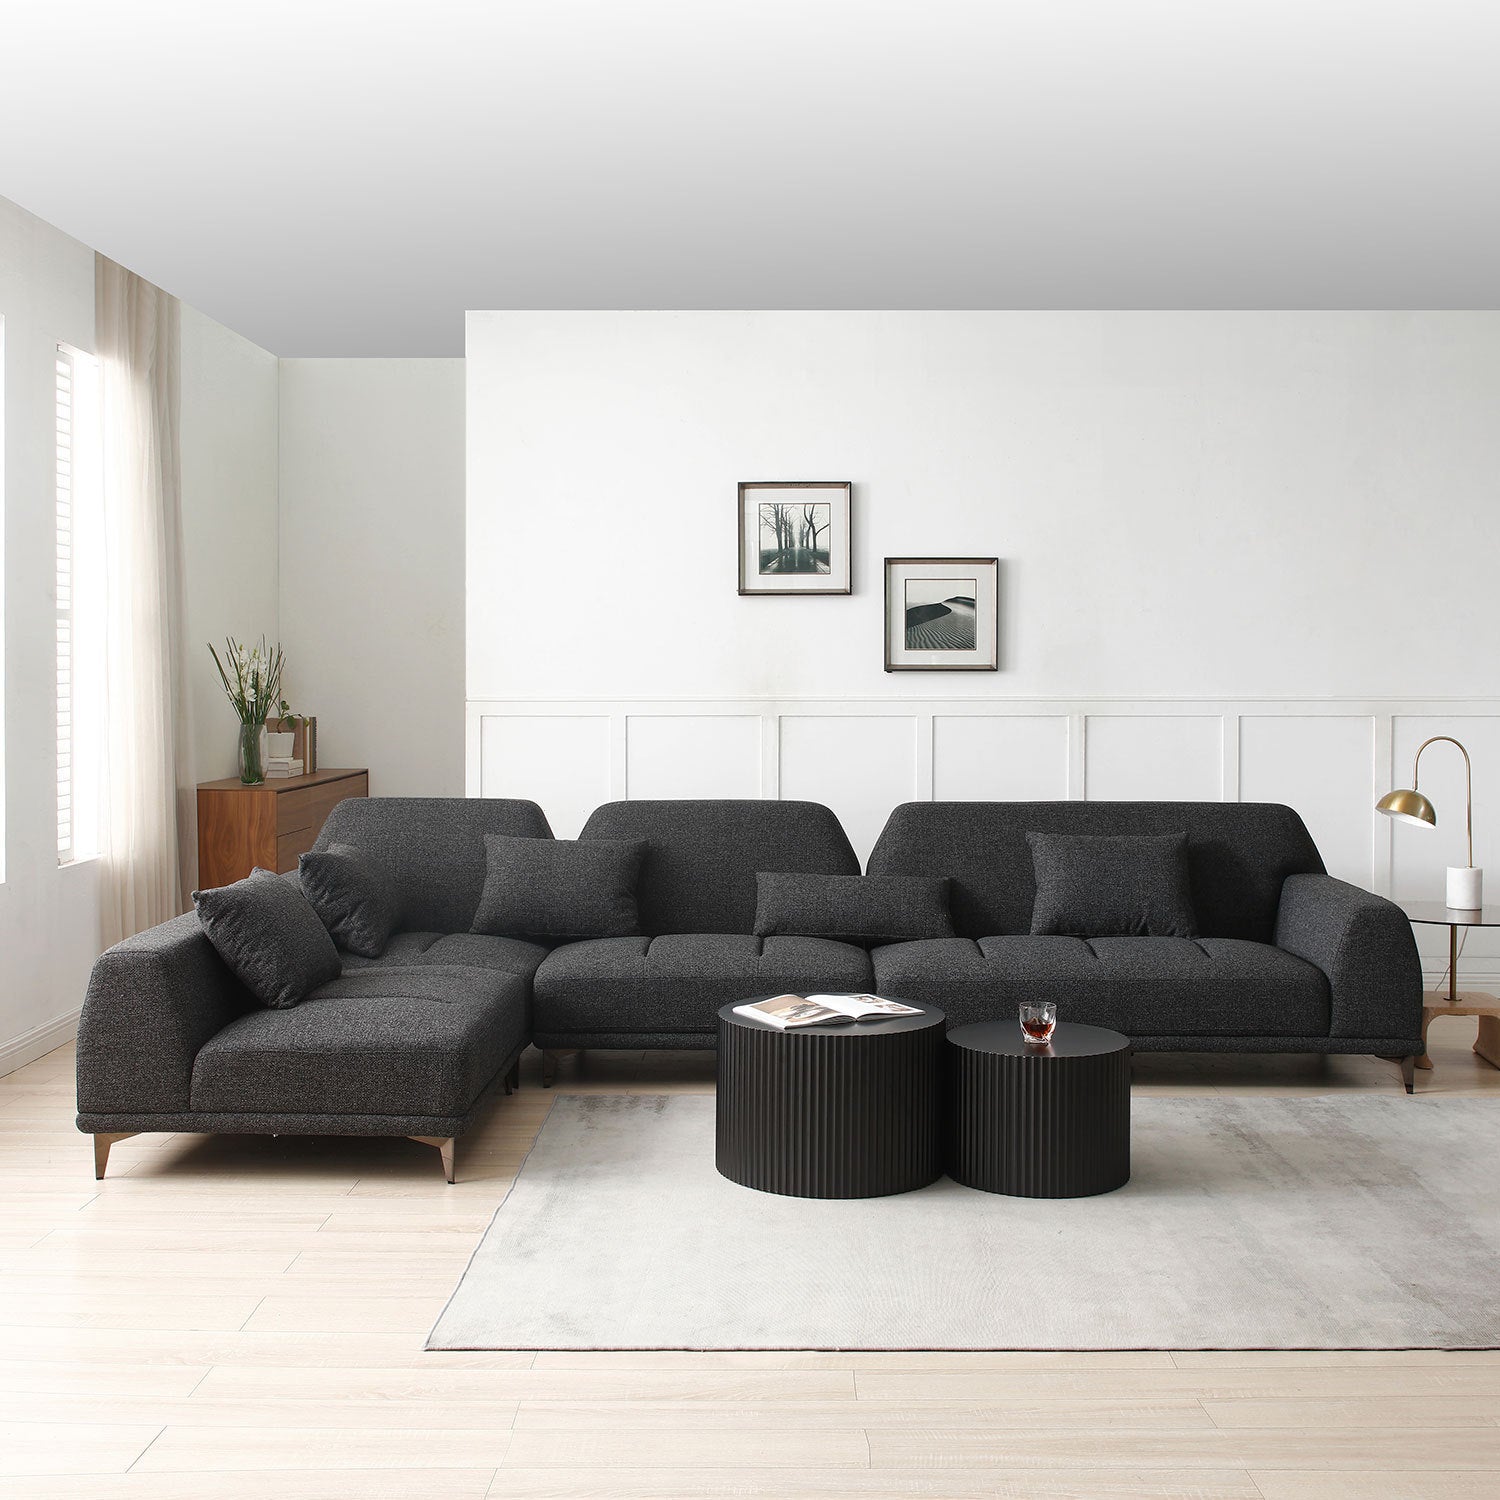 Modern Convertible Sectional Sofa in DARK Grey Fabric - Enova Luxe Home Store